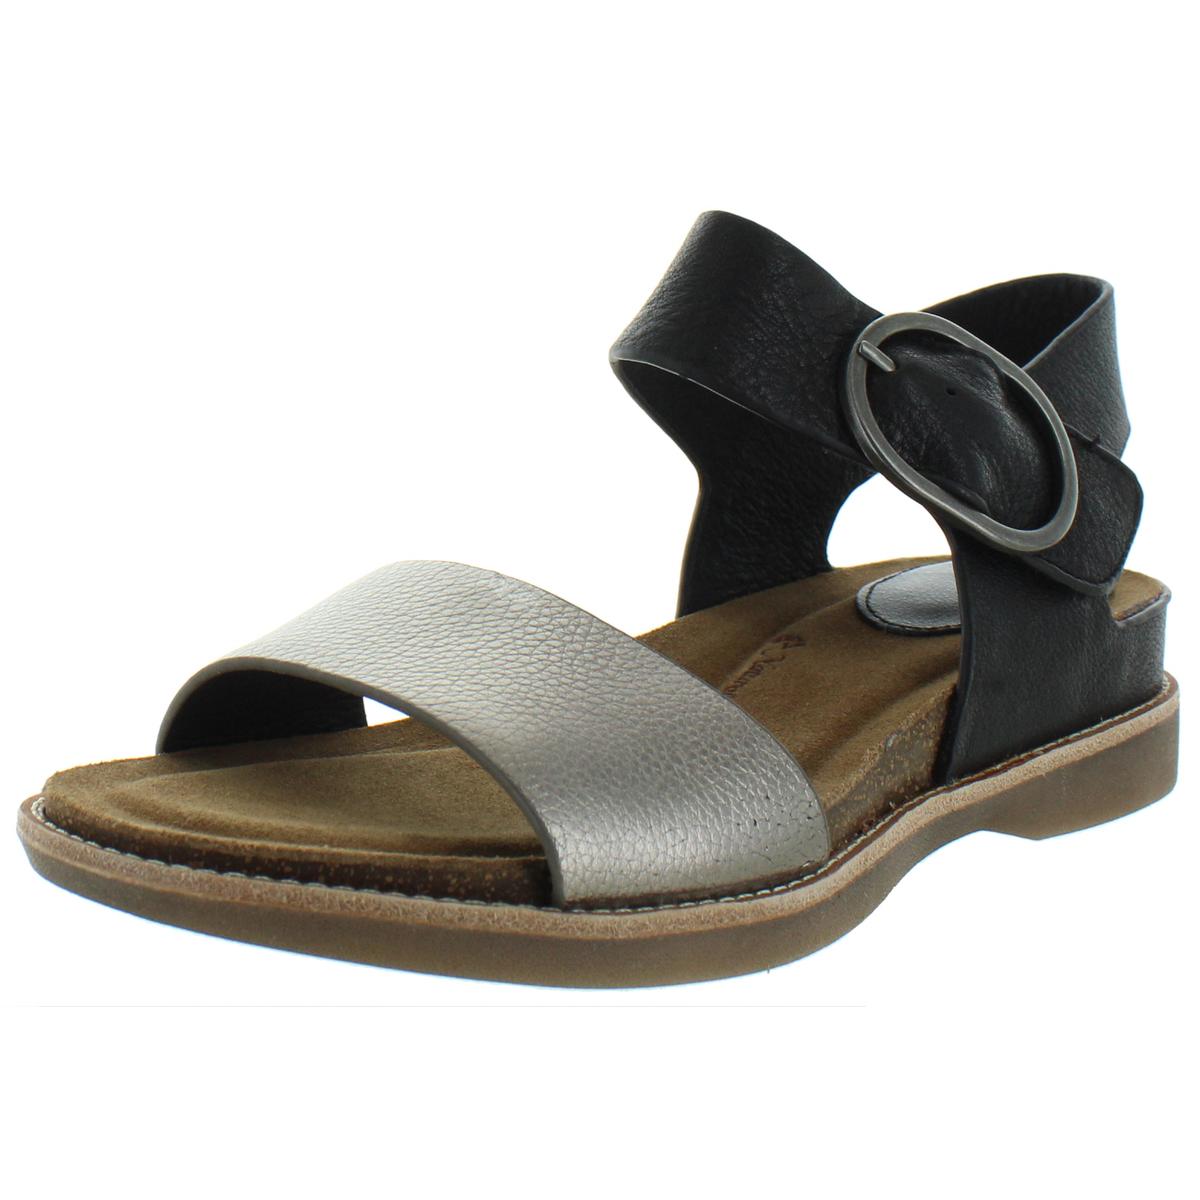 Sofft Womens Bali Black Leather Wedge Sandals Shoes 8.5 Medium (B,M ...